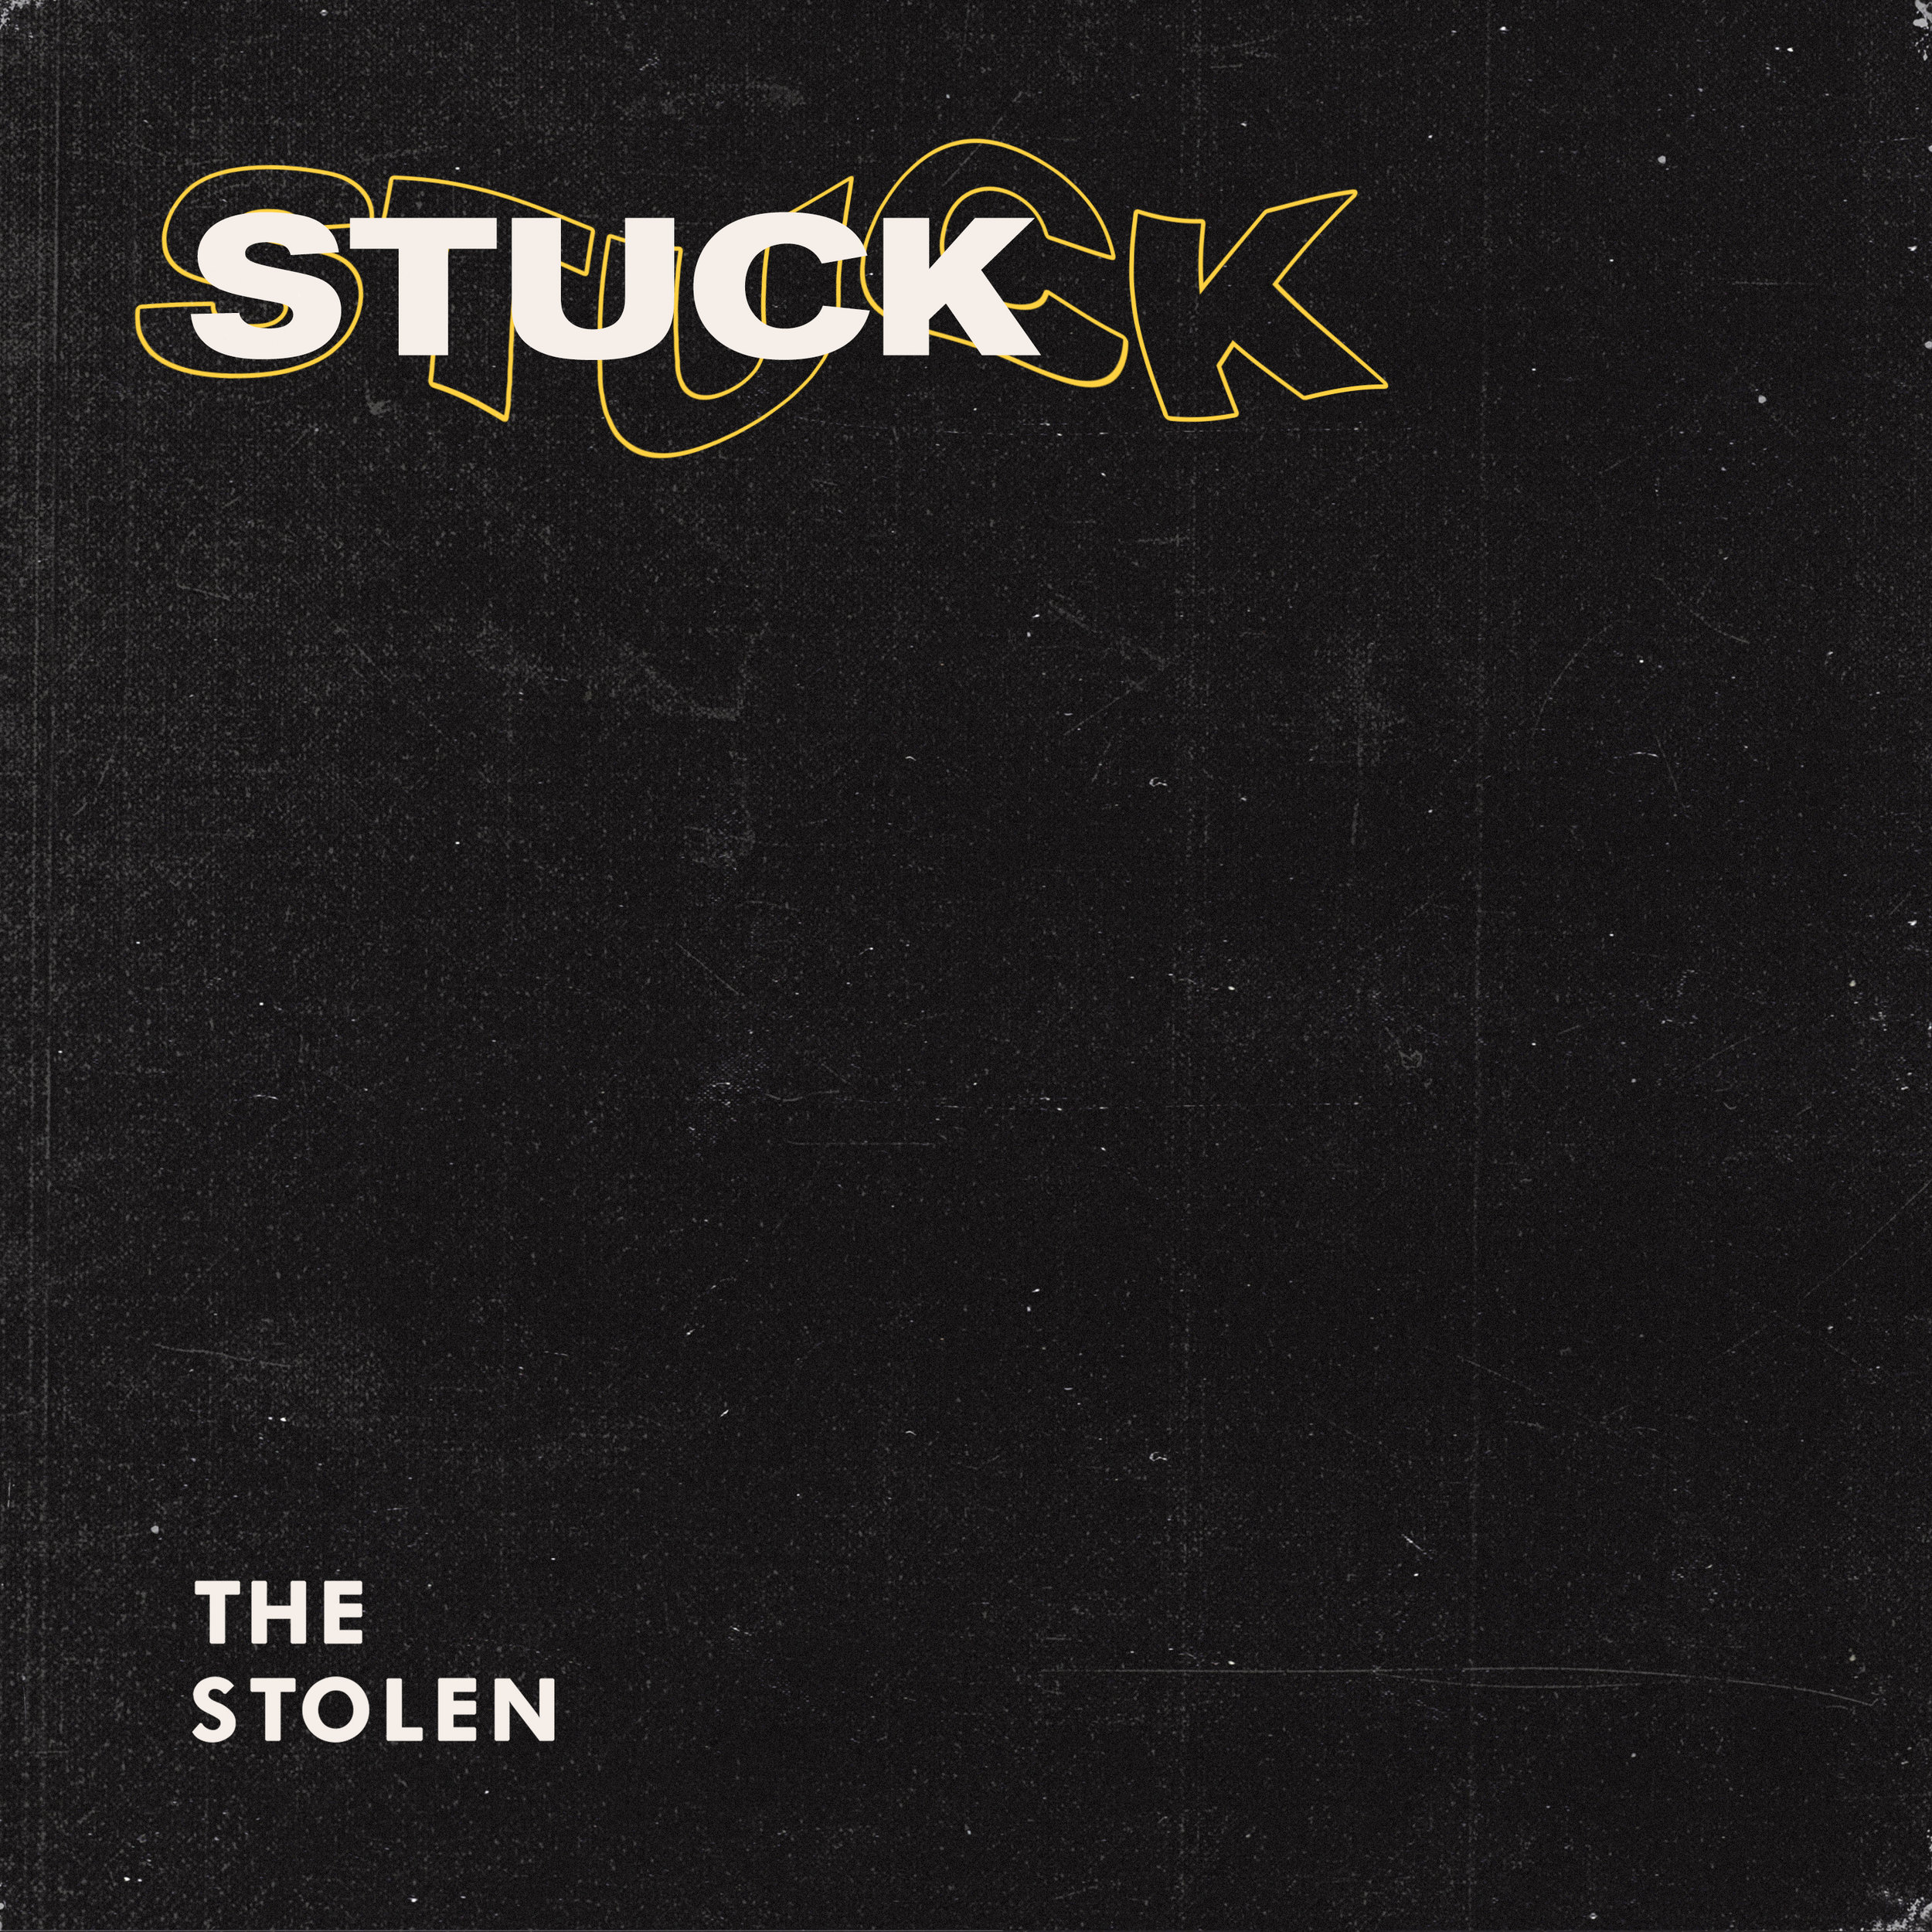 The Stolen - "Stuck"